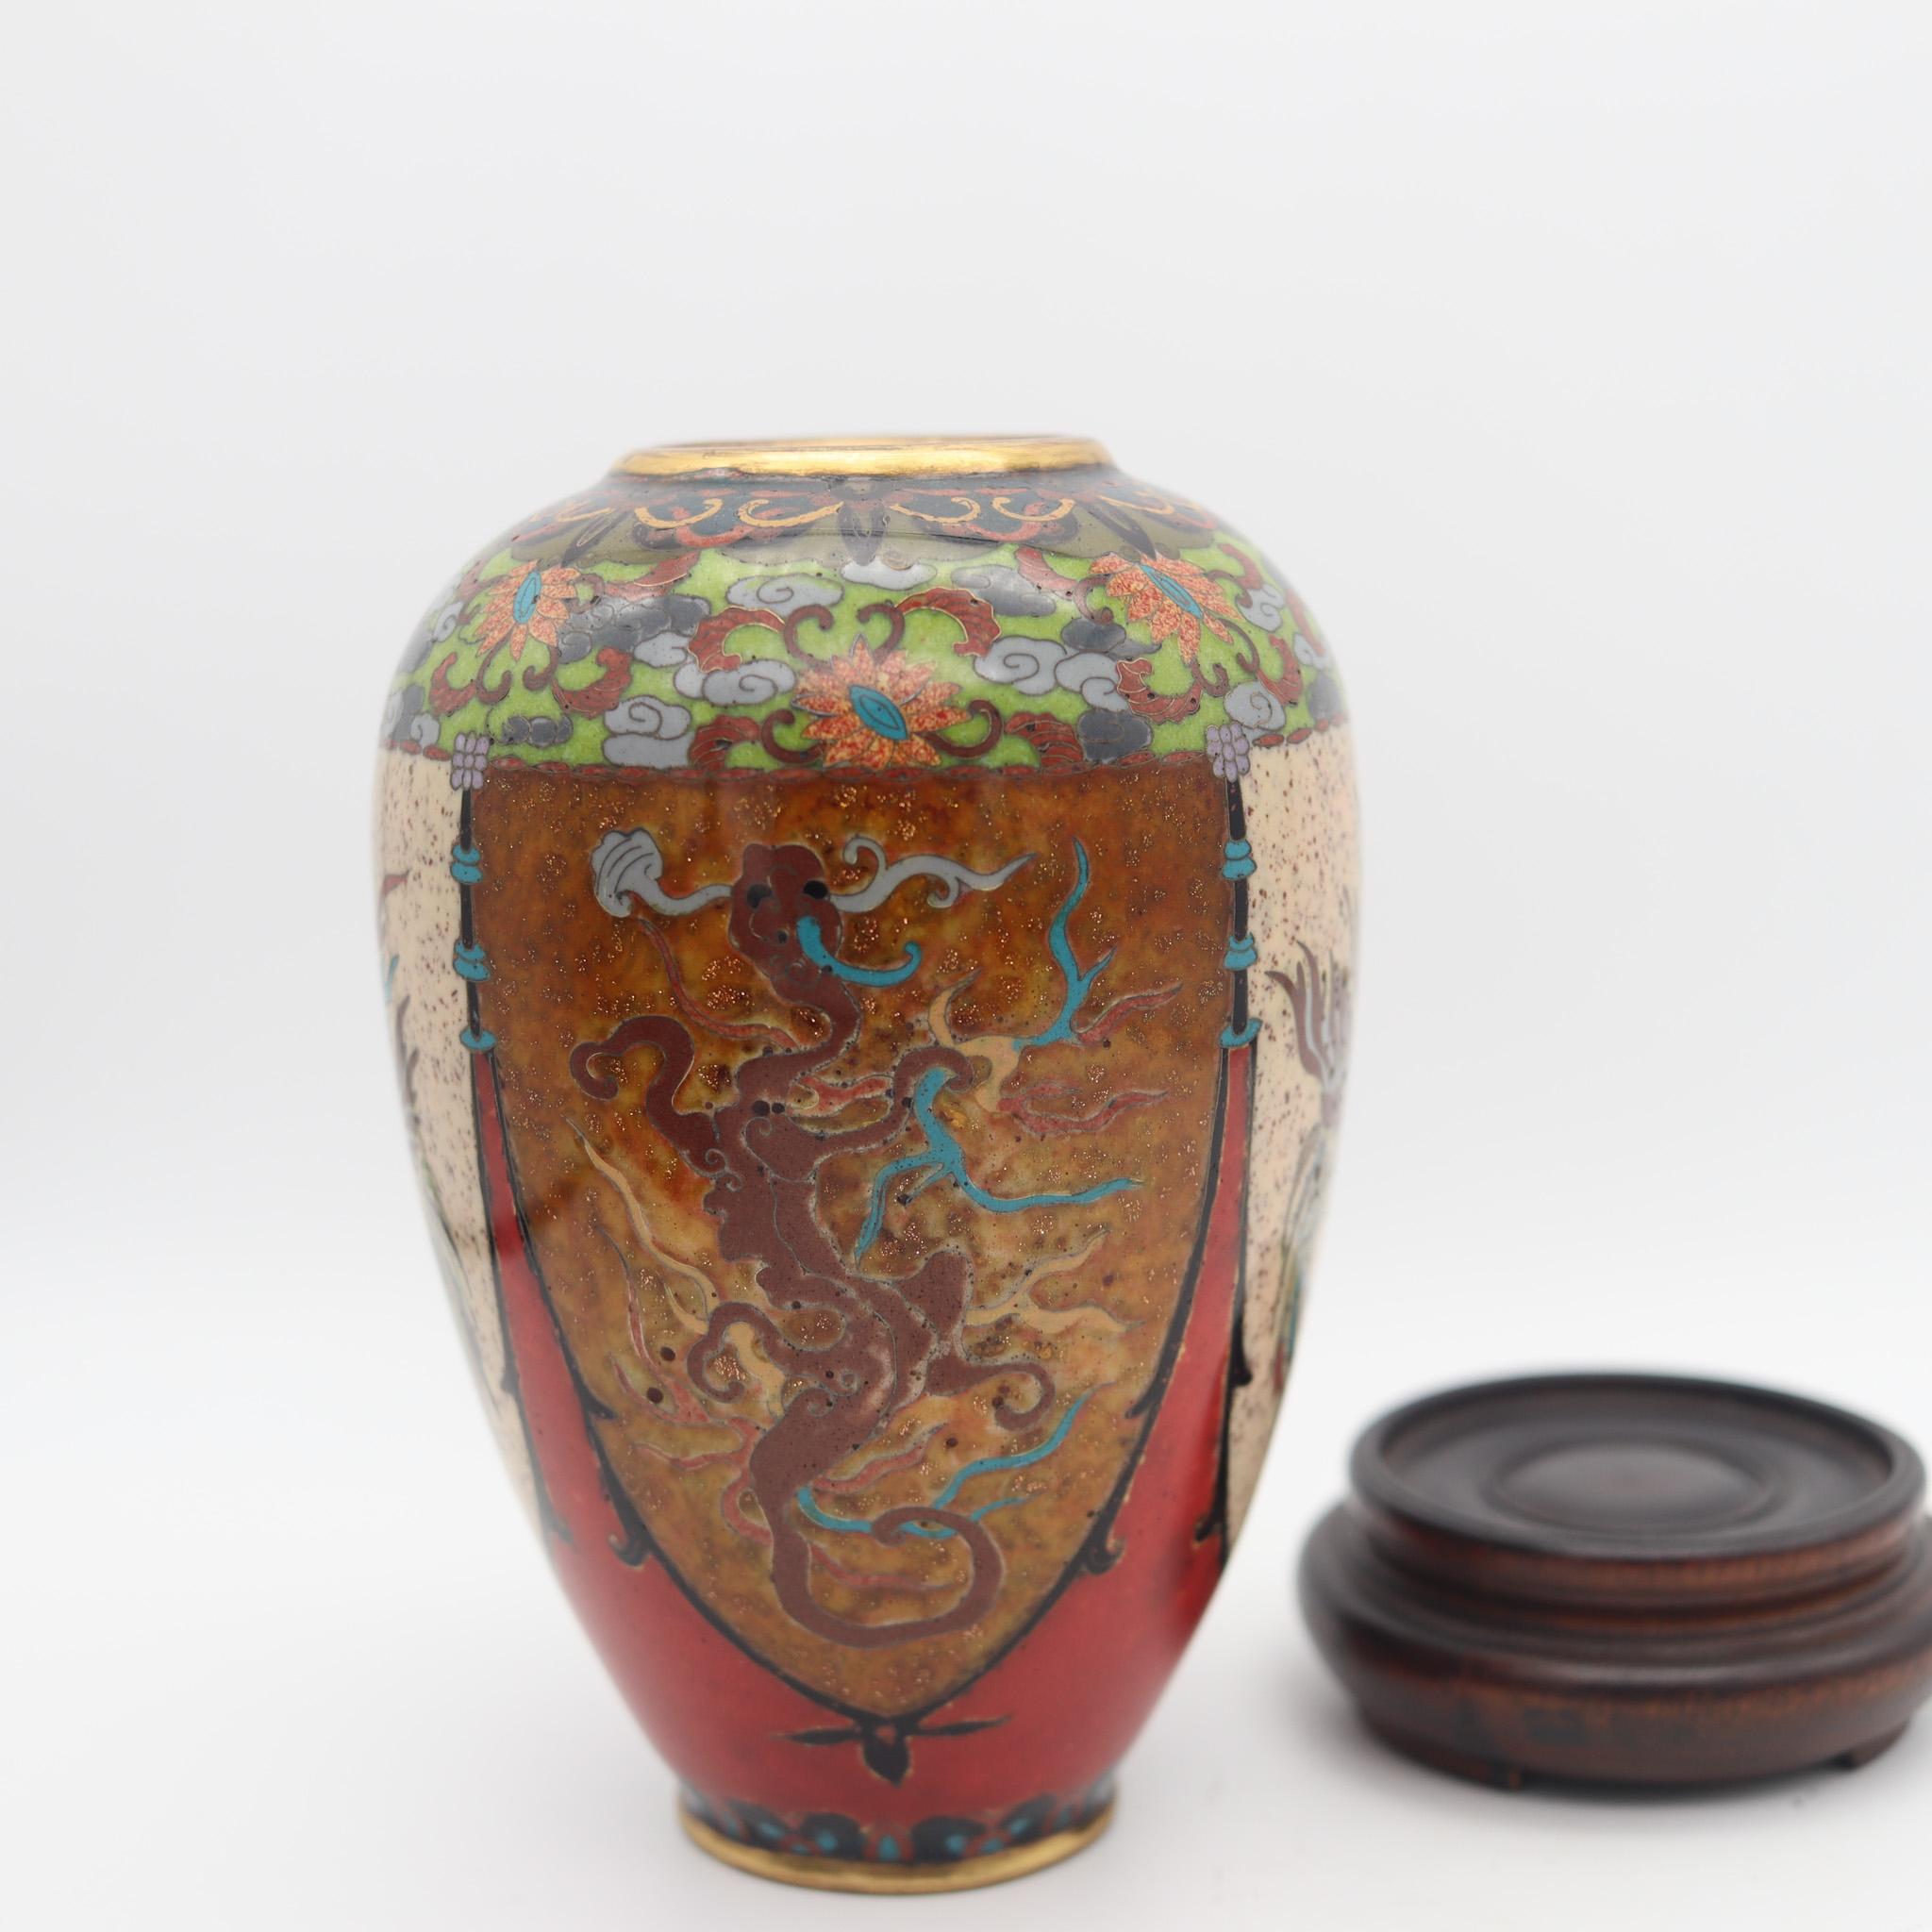 Japanese Japan 1890 Meiji Period Decorative Vase In Cloisonné Enamel With Wood Base For Sale